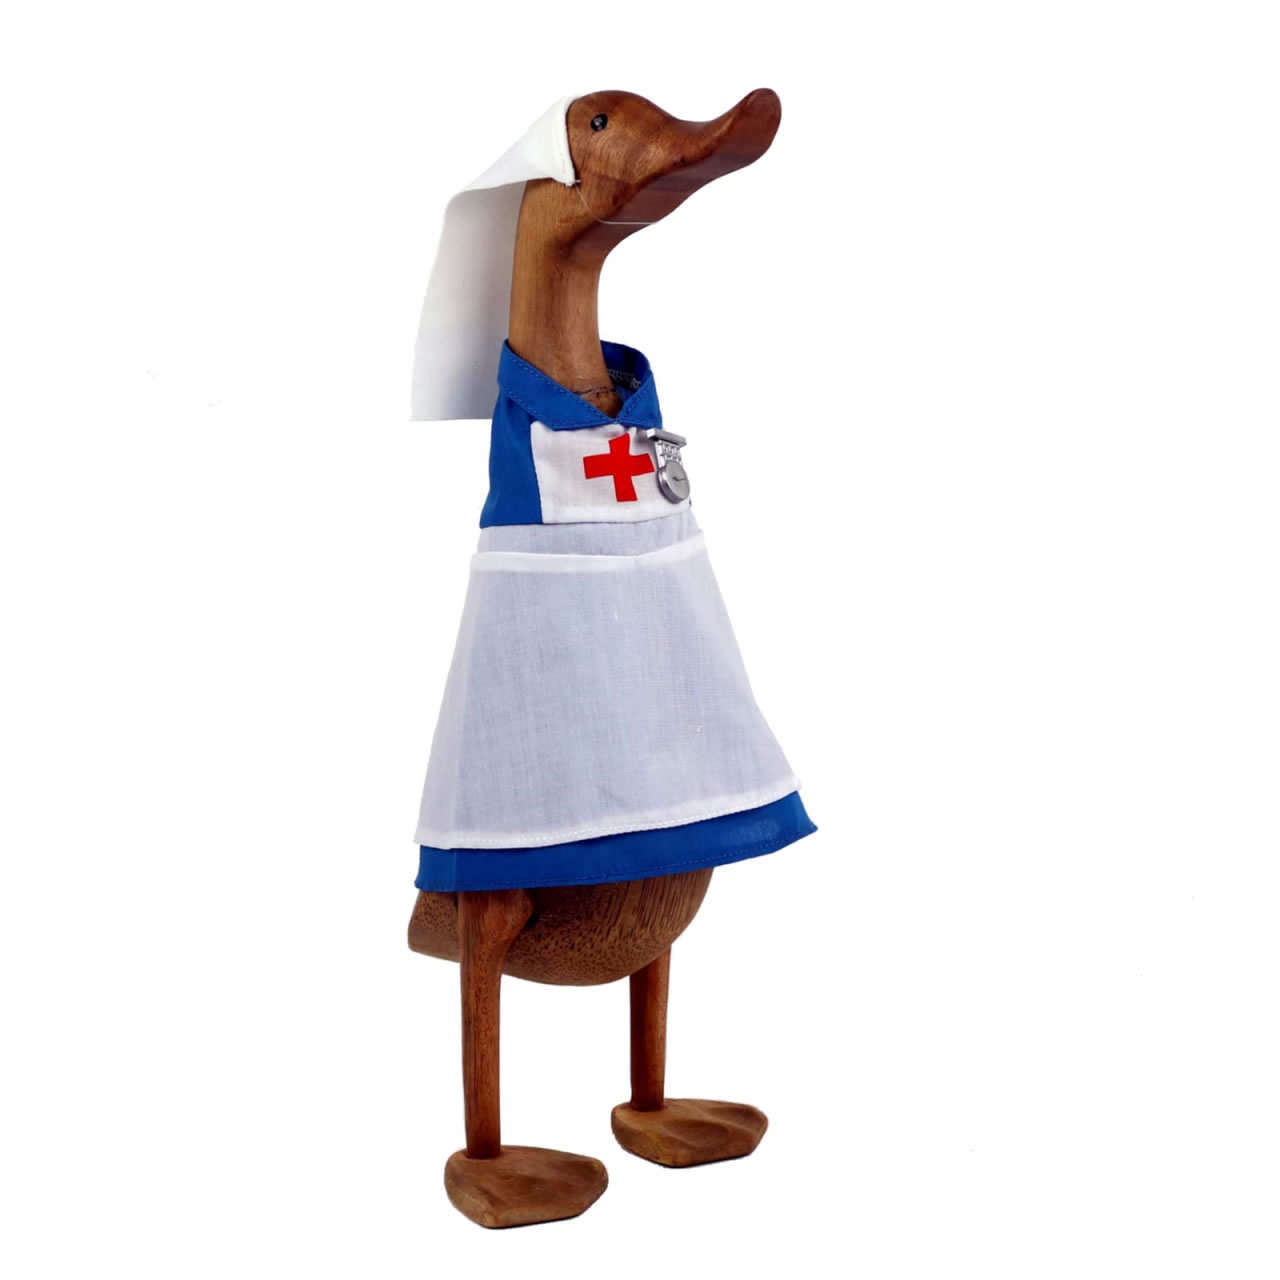 Nurse Wooden Duck - Fun Thank You Gift, Graduation Present